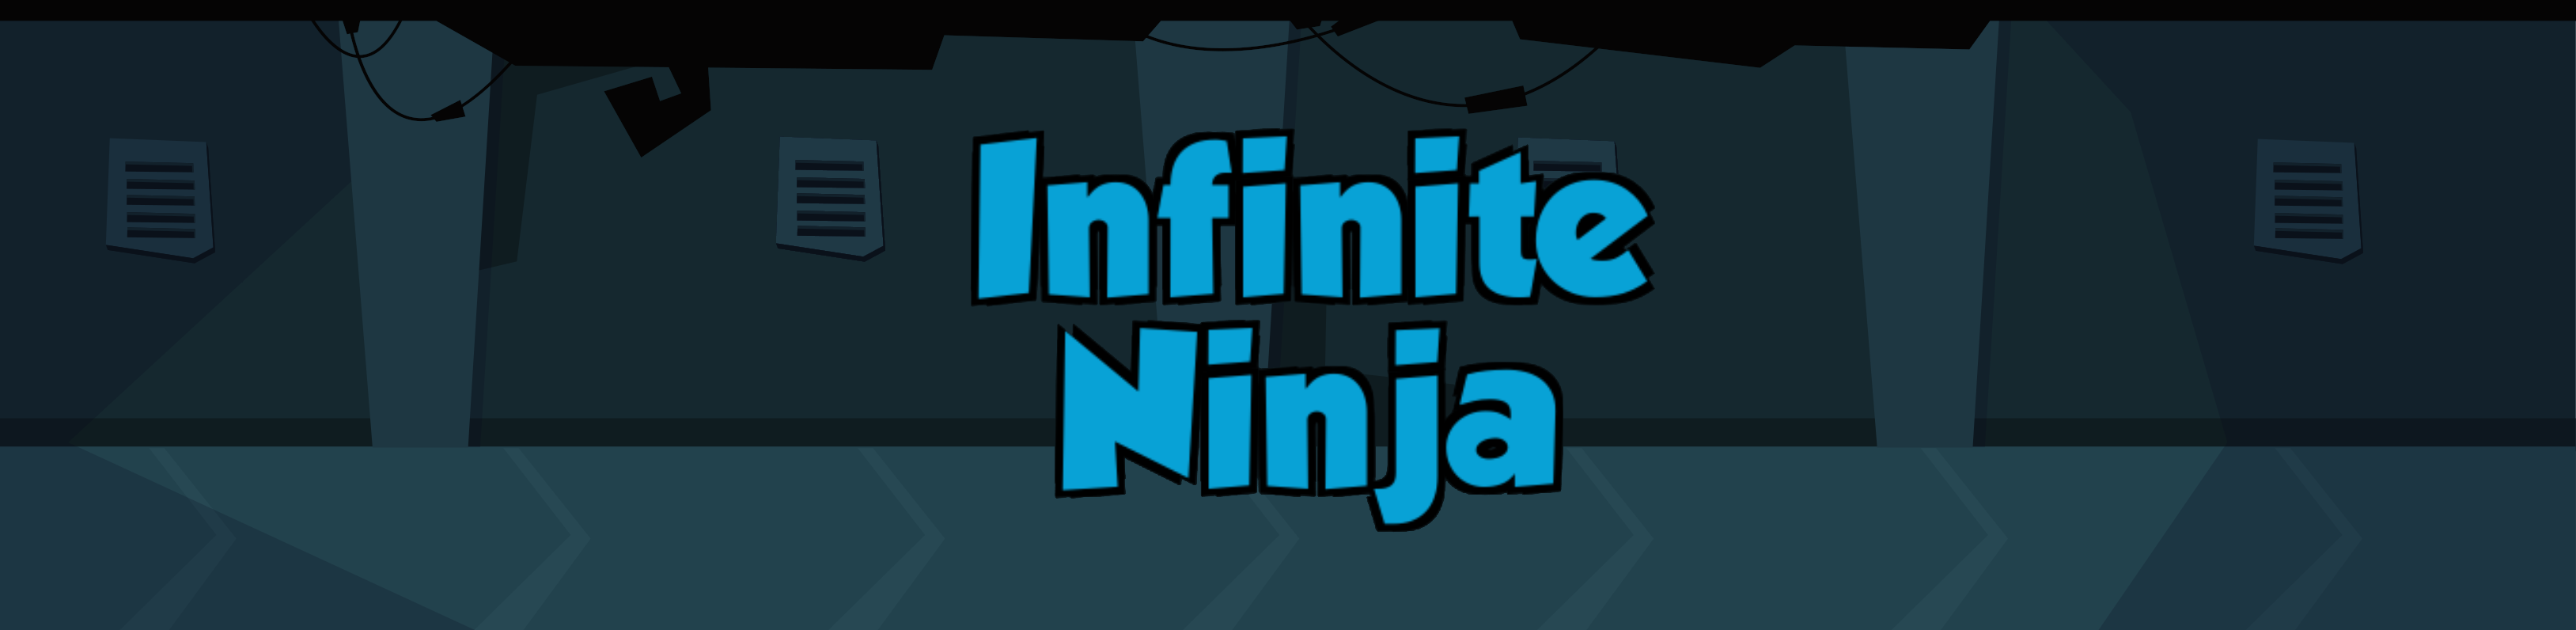 Infinite Ninja